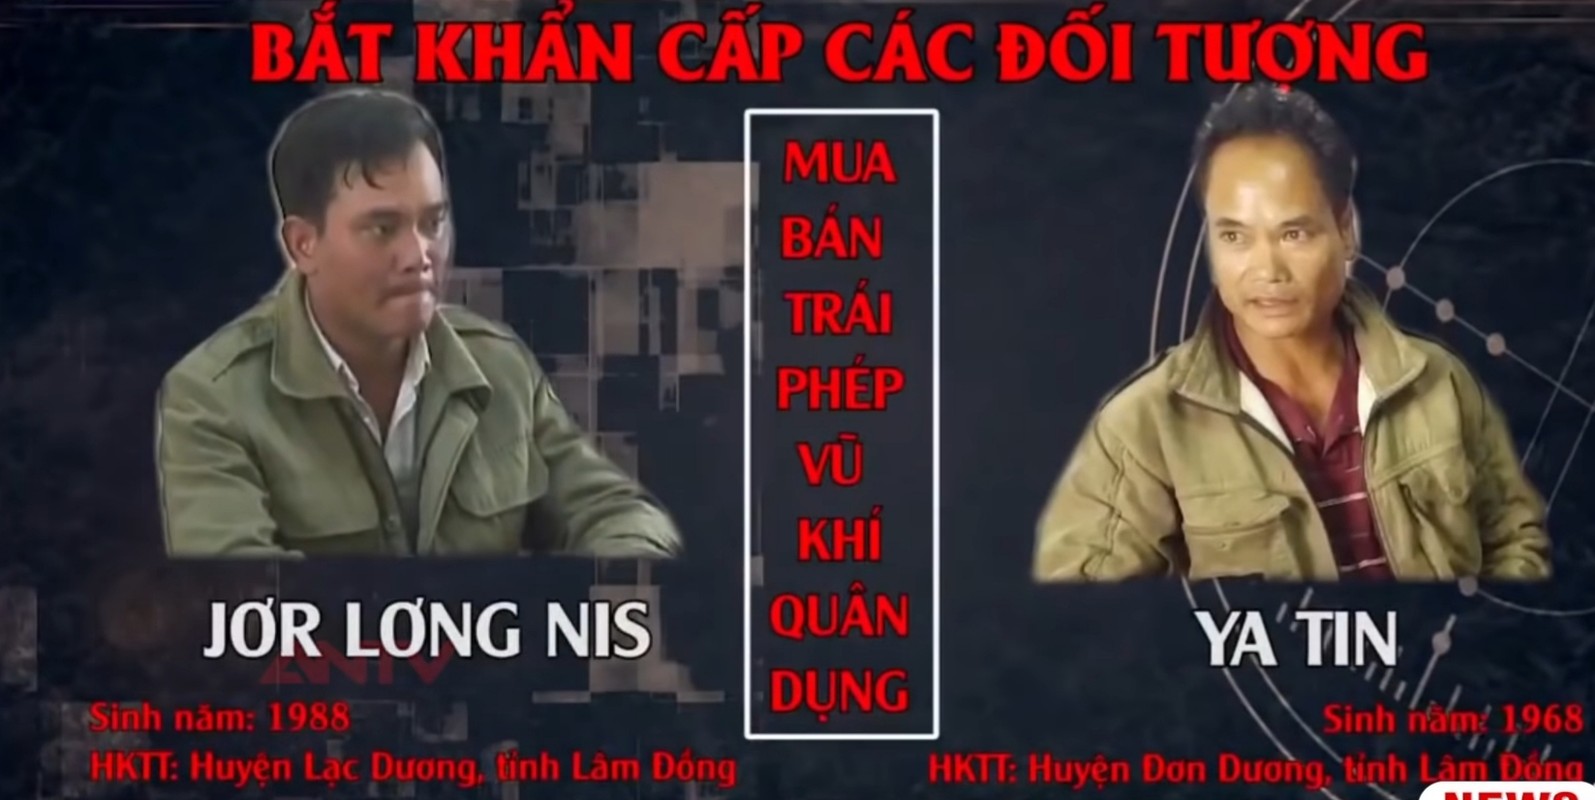 Hanh trinh pha an: Thi the ben dong suoi to cao ke sat nhan mau lanh-Hinh-24